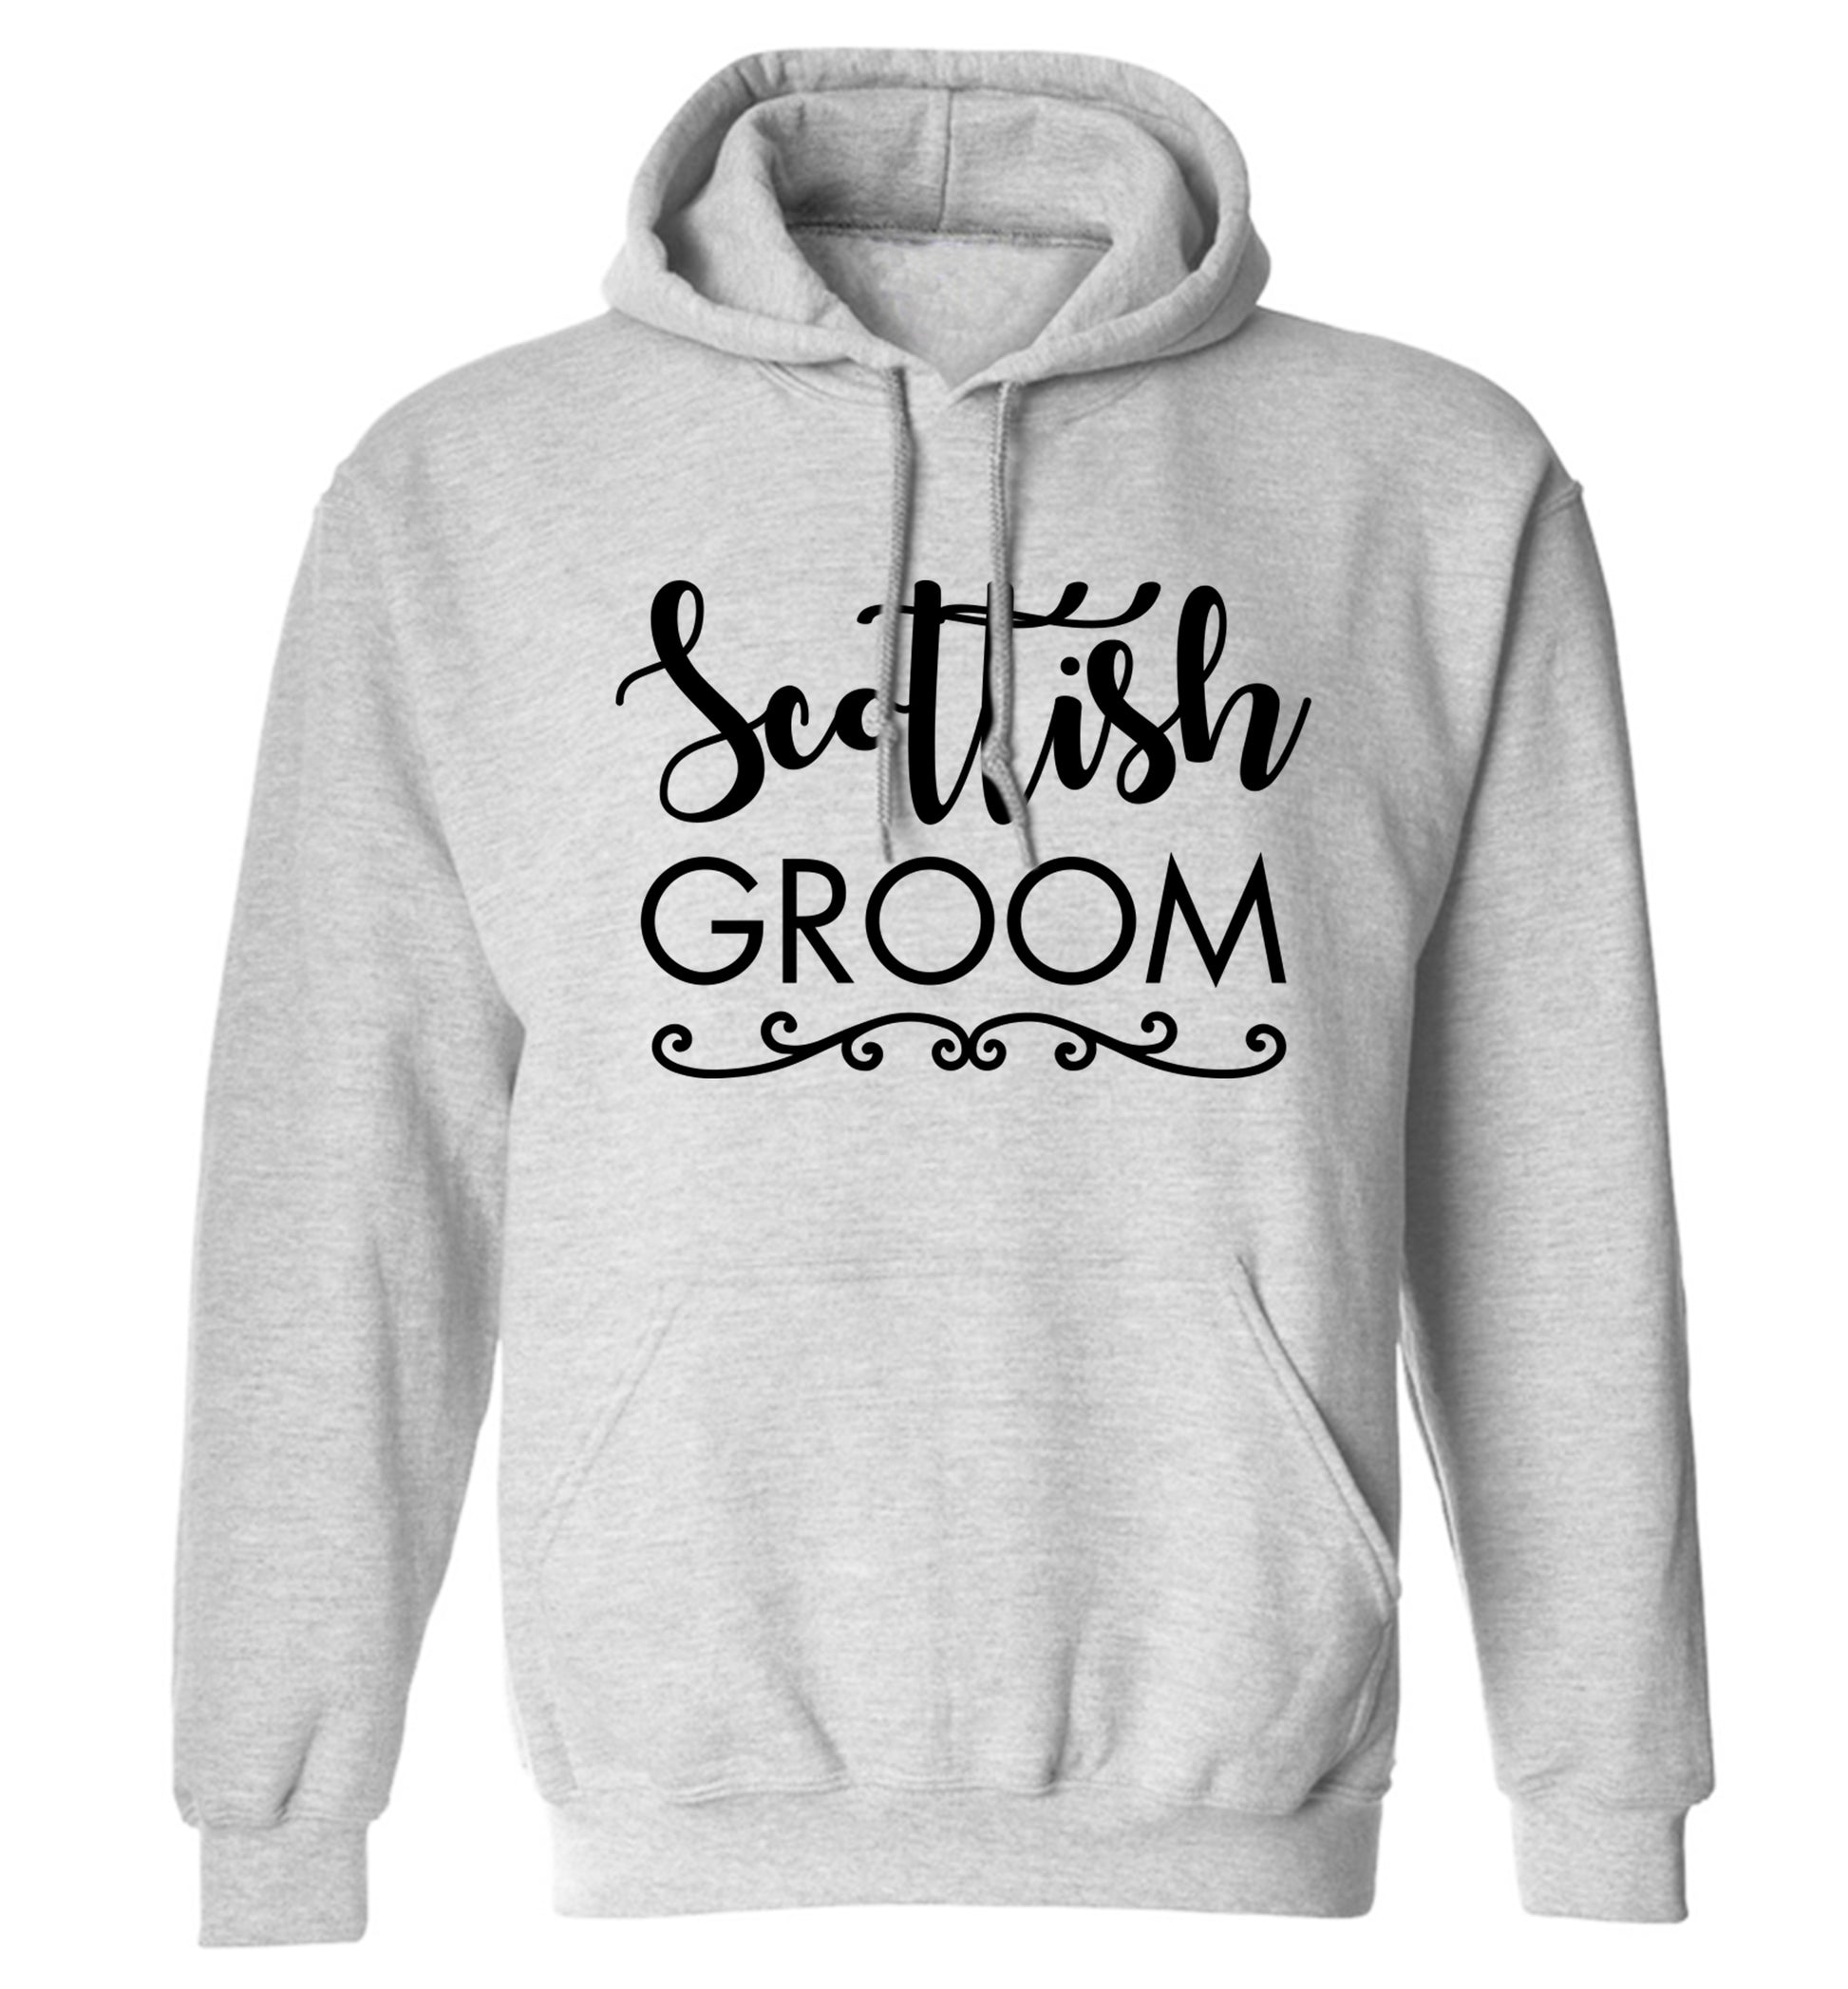 Scottish groom adults unisex grey hoodie 2XL